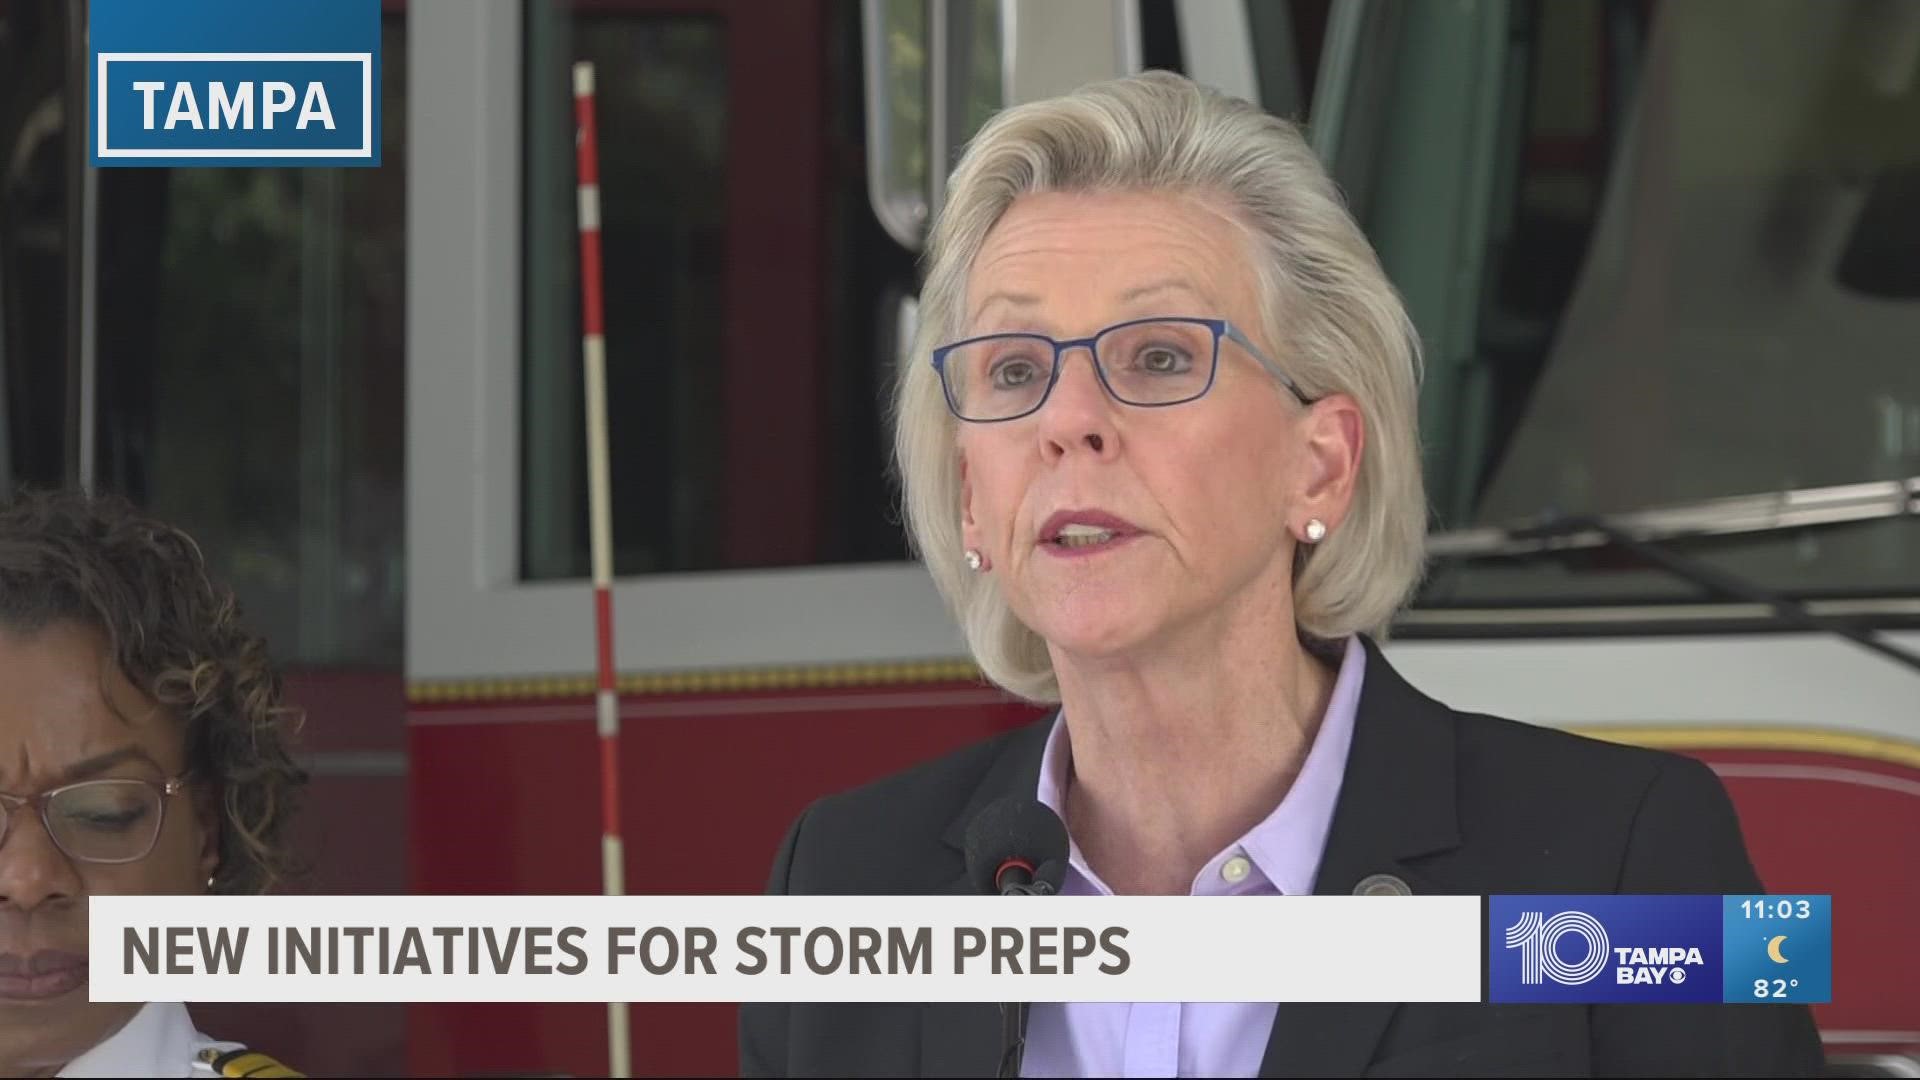 Tampa Mayor Jane Castor said the city has new ways to respond to a storm this hurricane season.